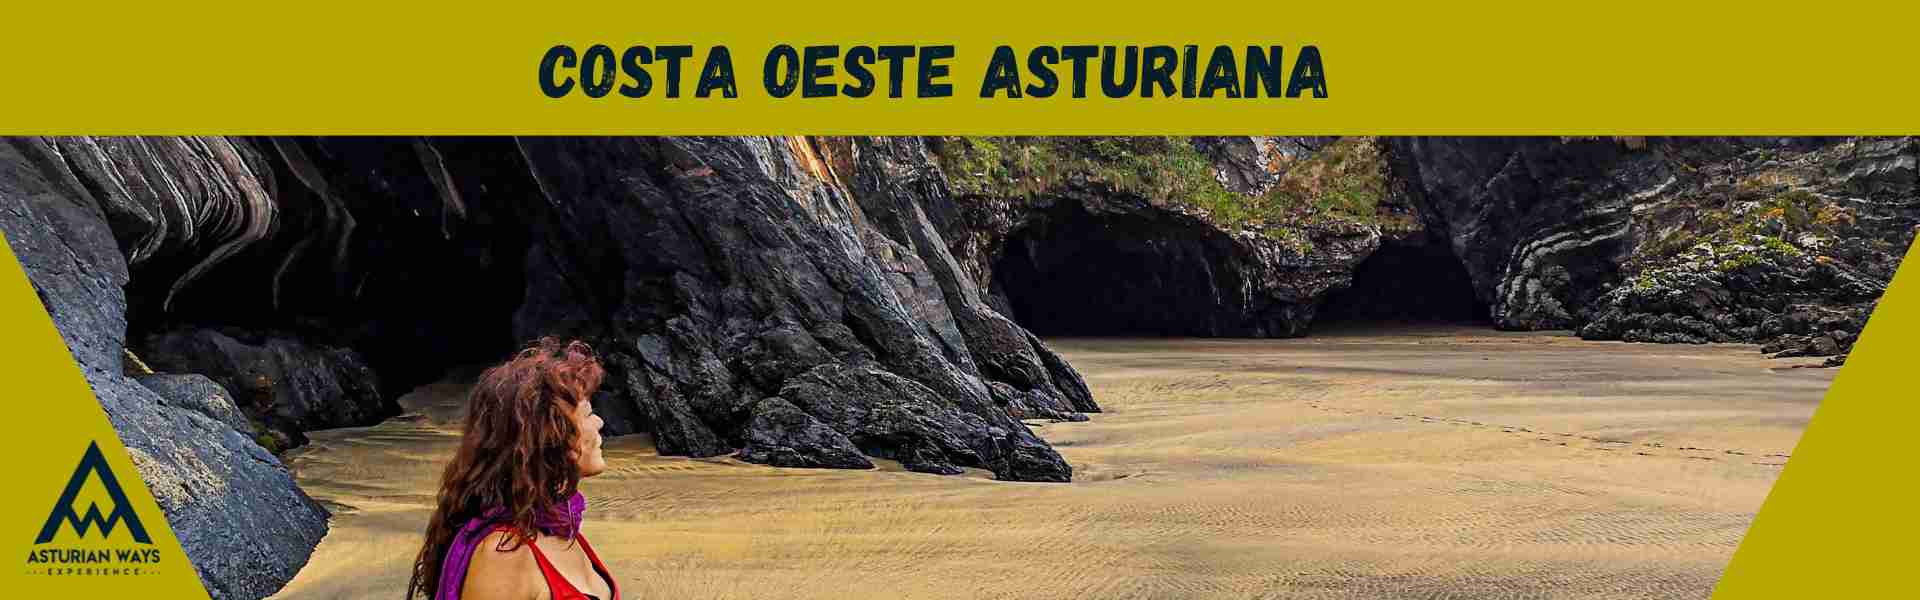 Escapada costa oeste asturiana